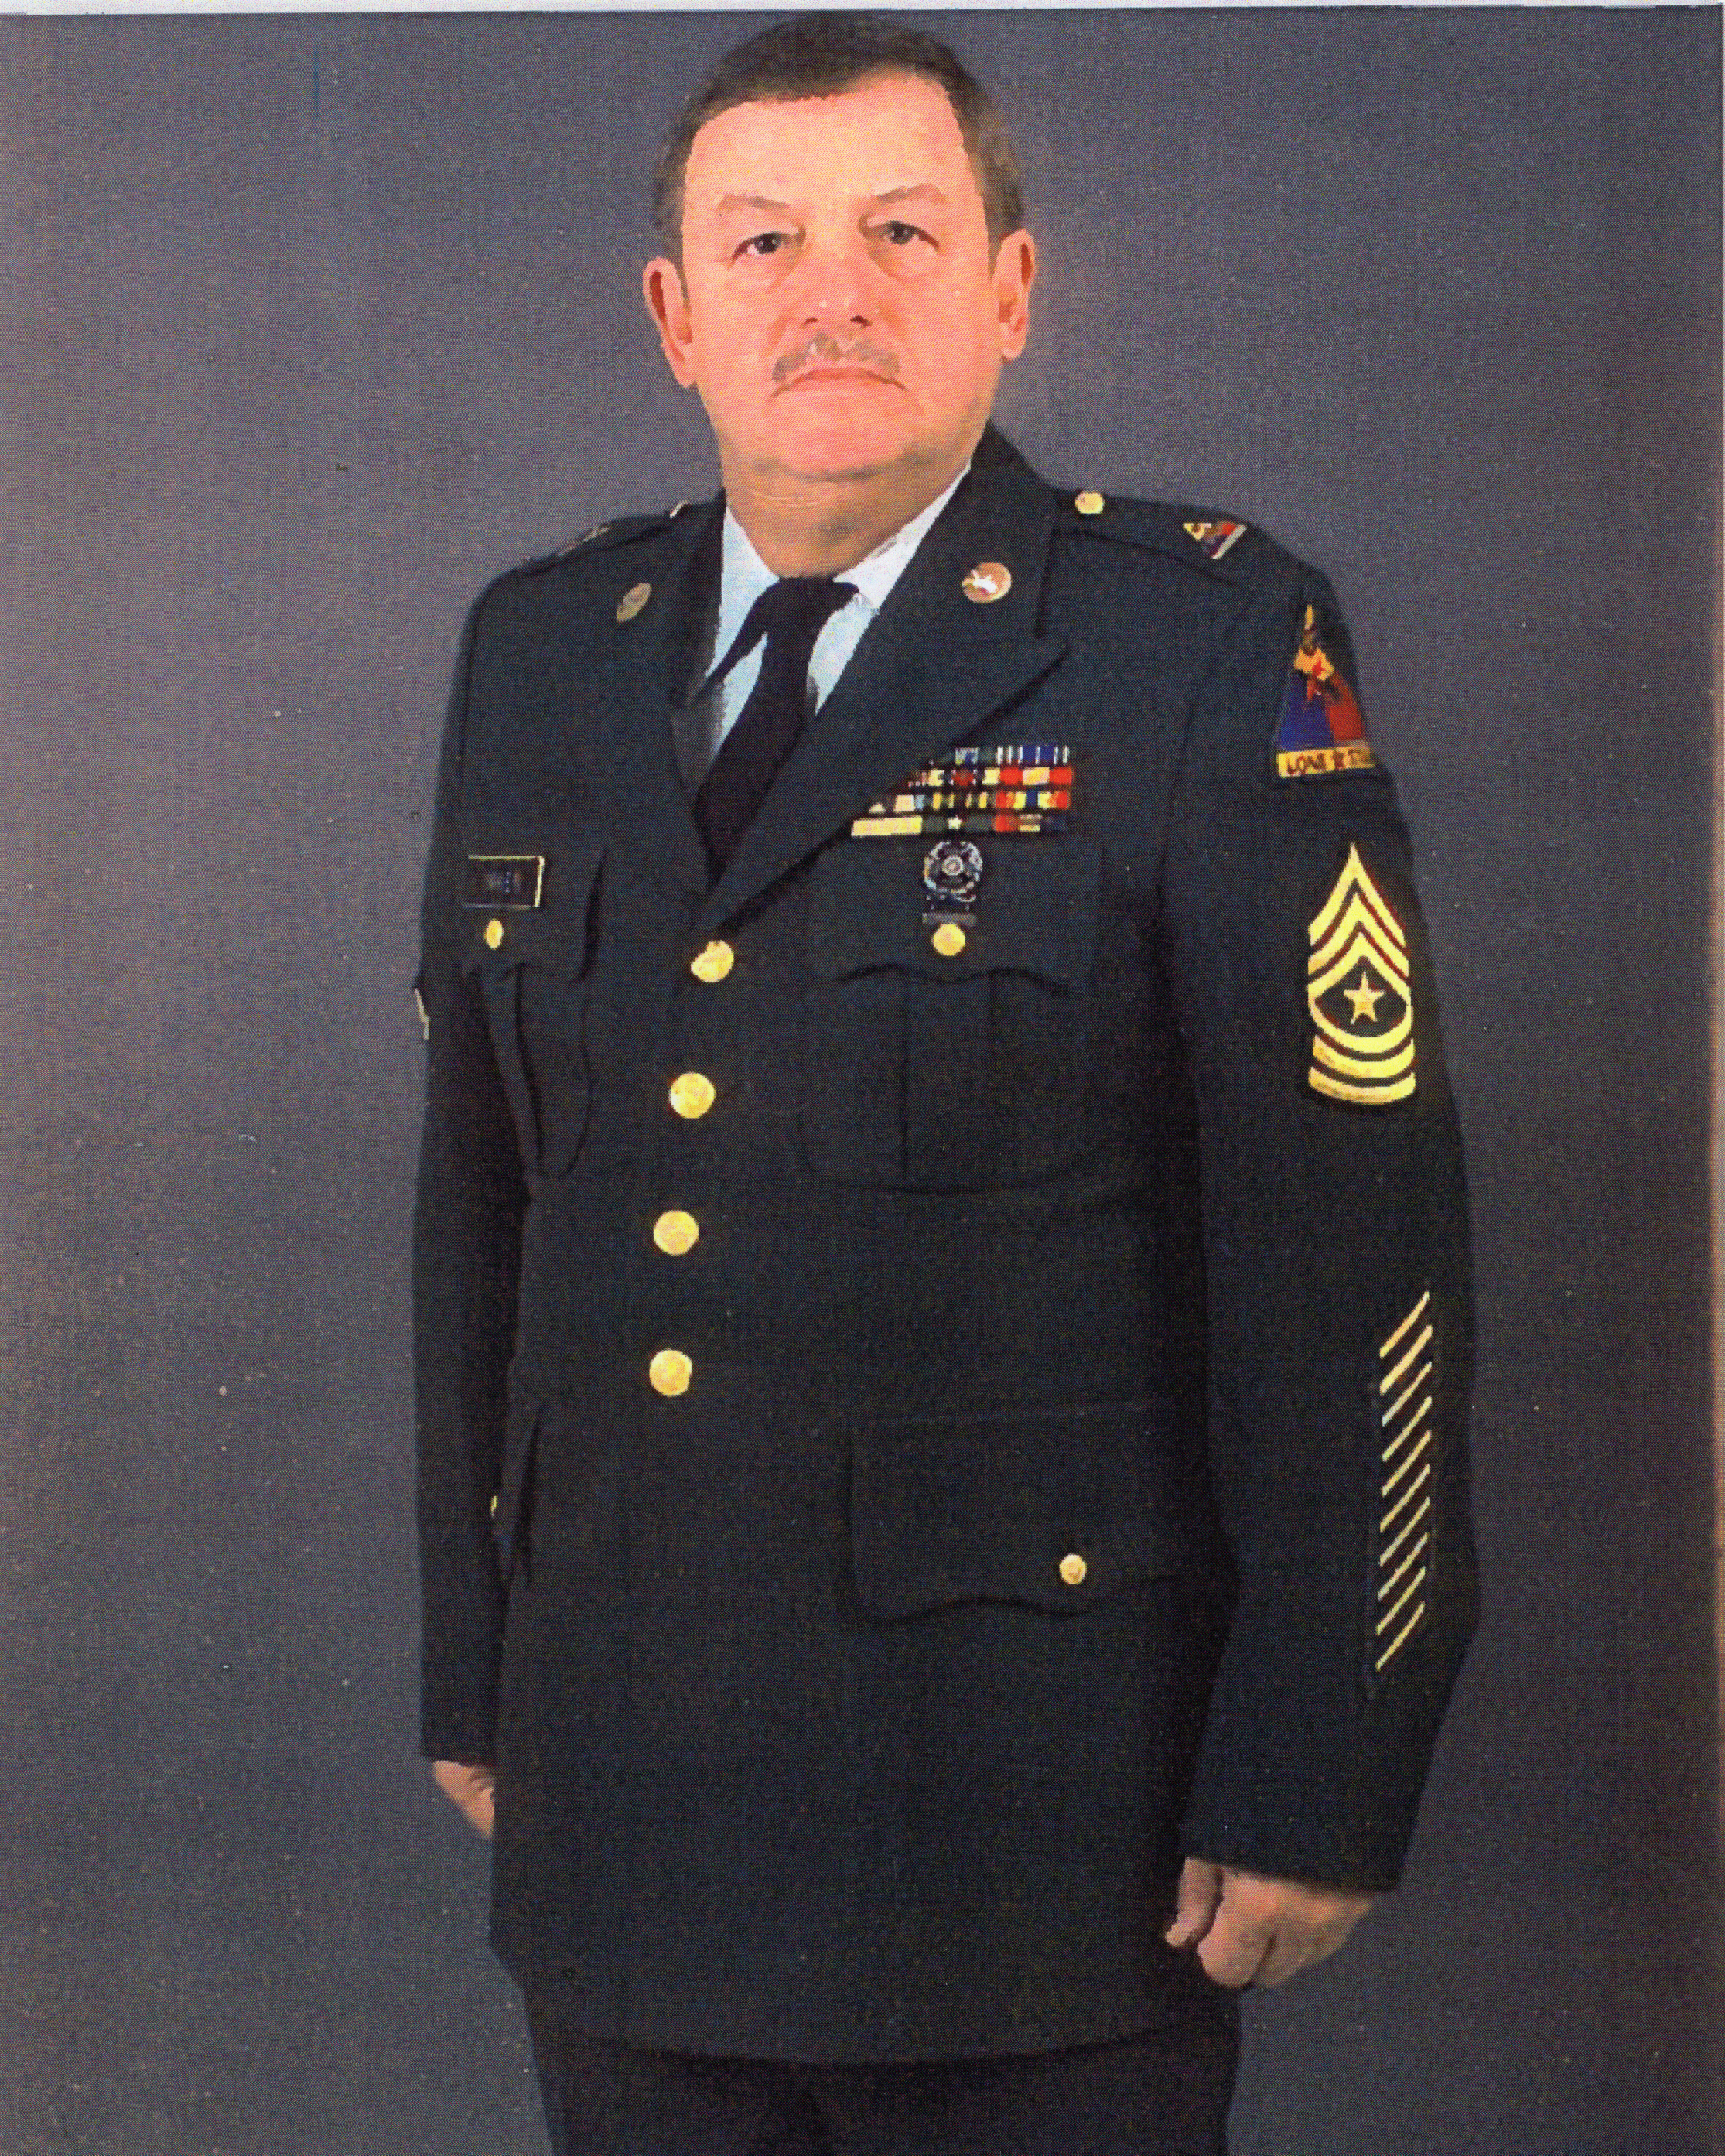 Sergeant Major Elwood H. Imken